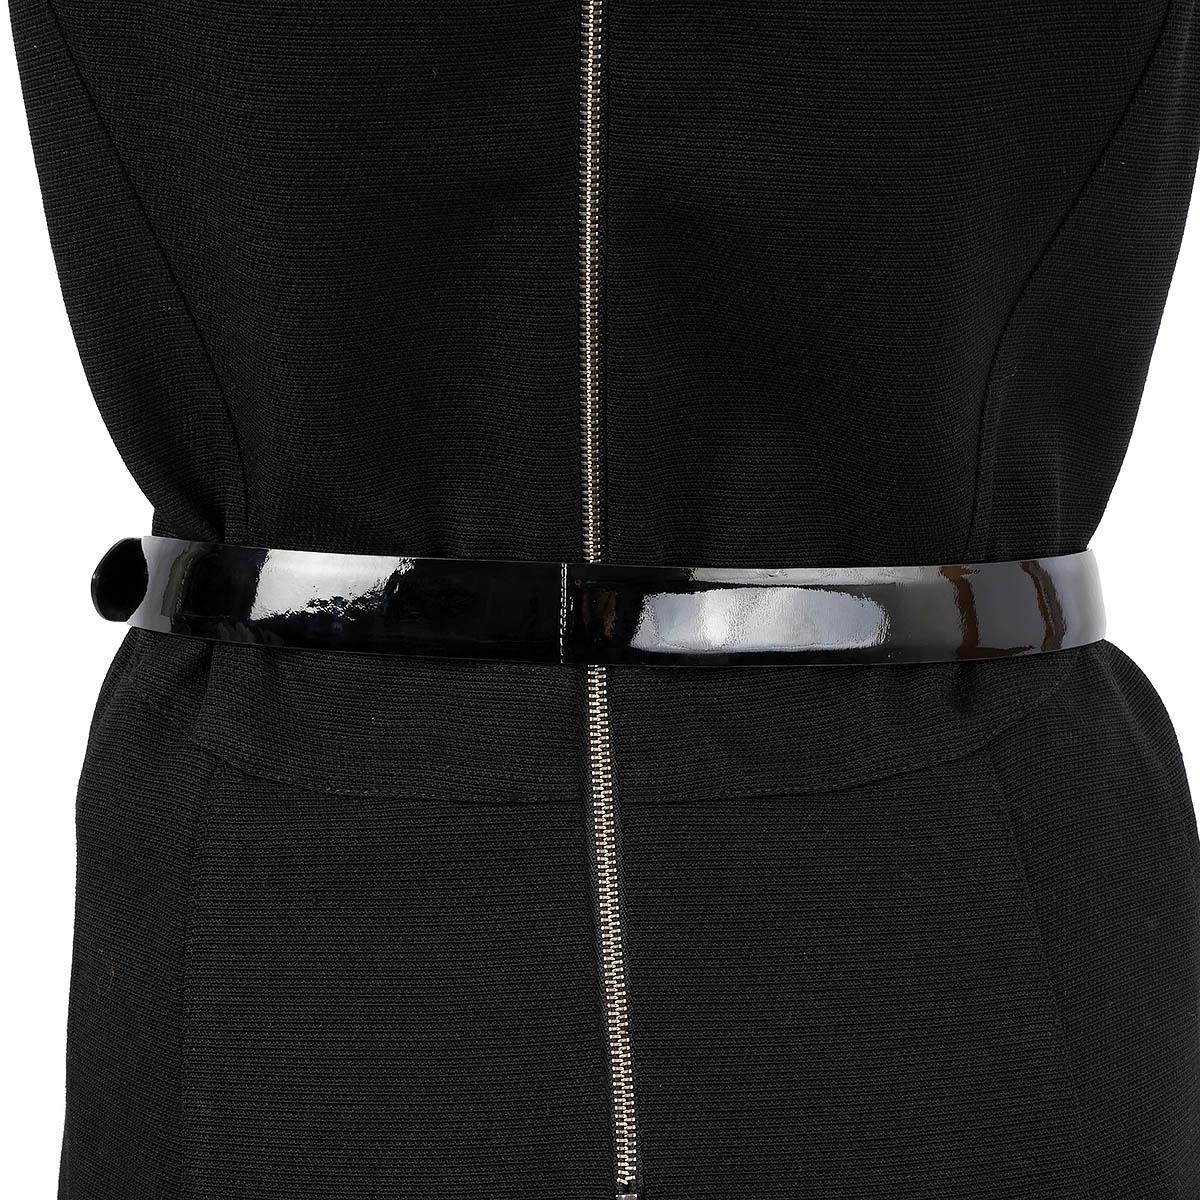 MIU MIU black patent leather ARROW WAIST Belt 75 In Excellent Condition For Sale In Zürich, CH